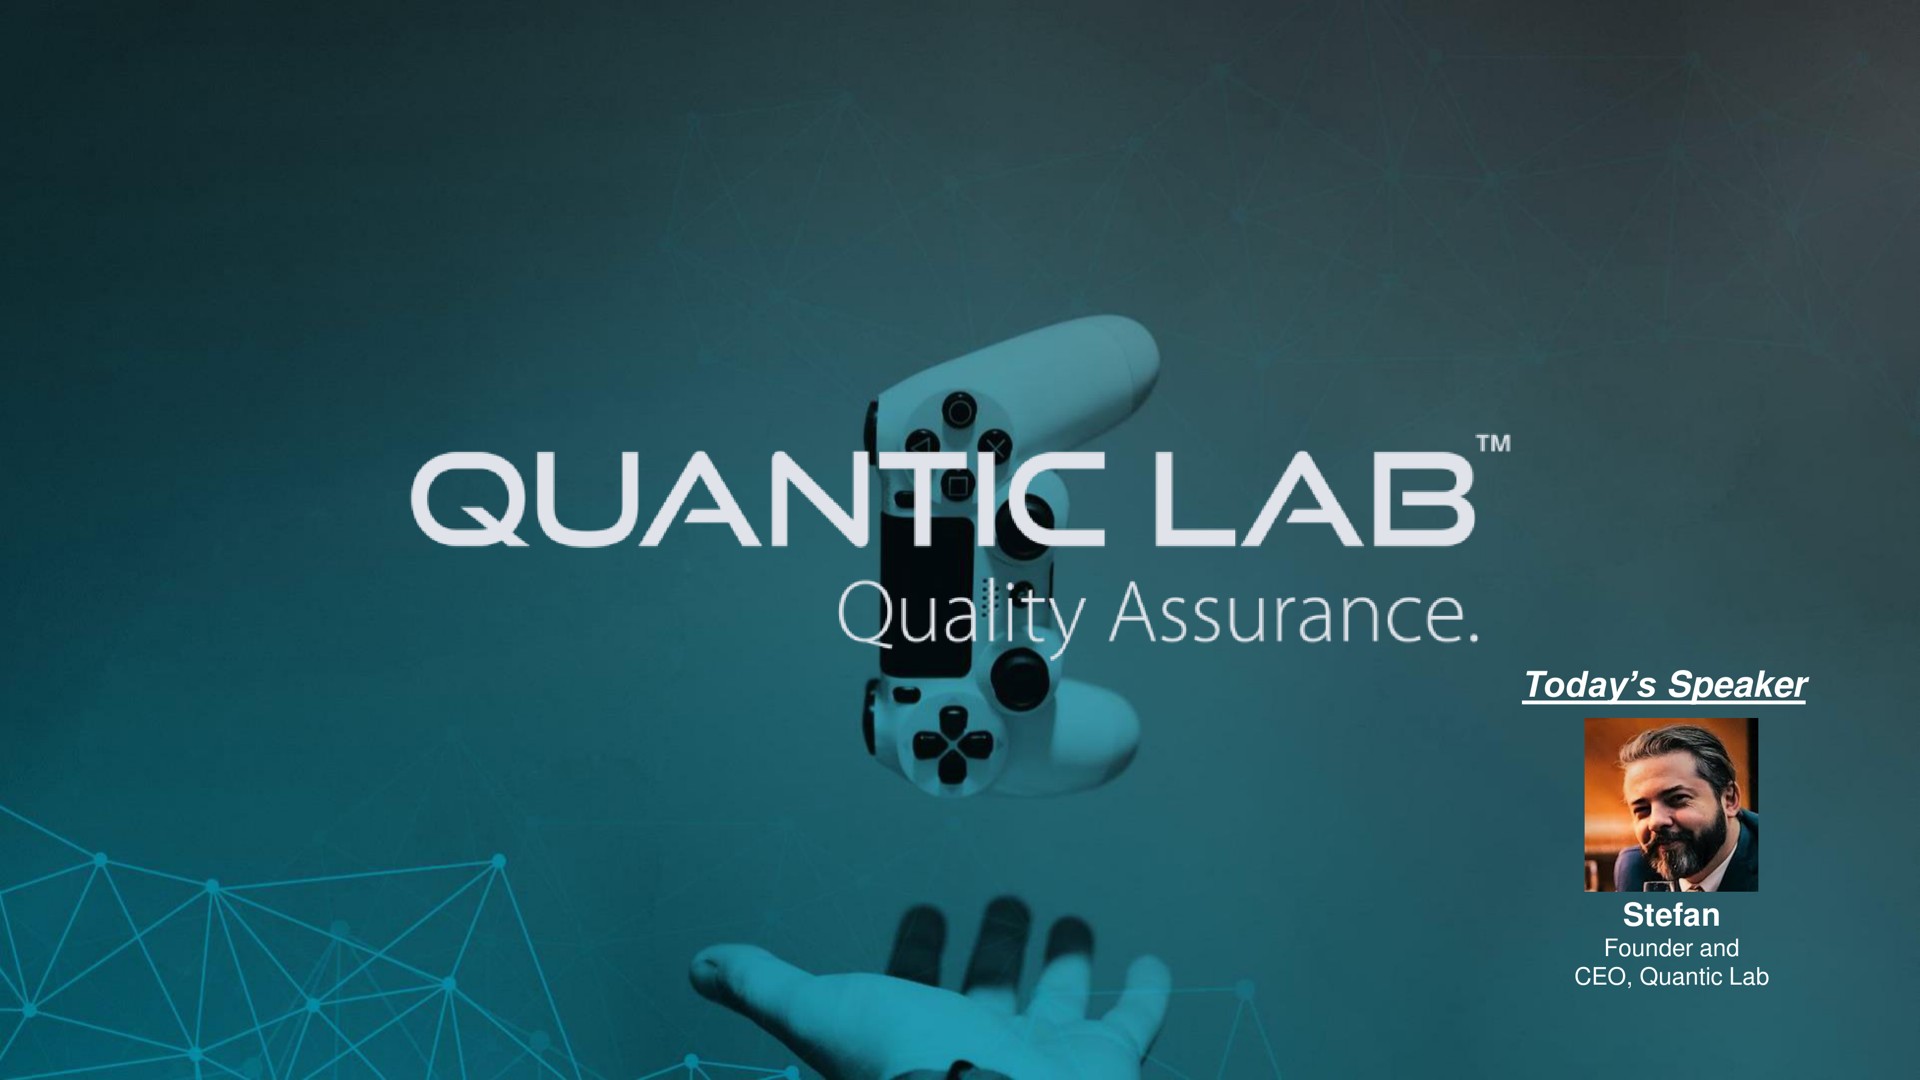 quantic lab quality assurance | Embracer Group